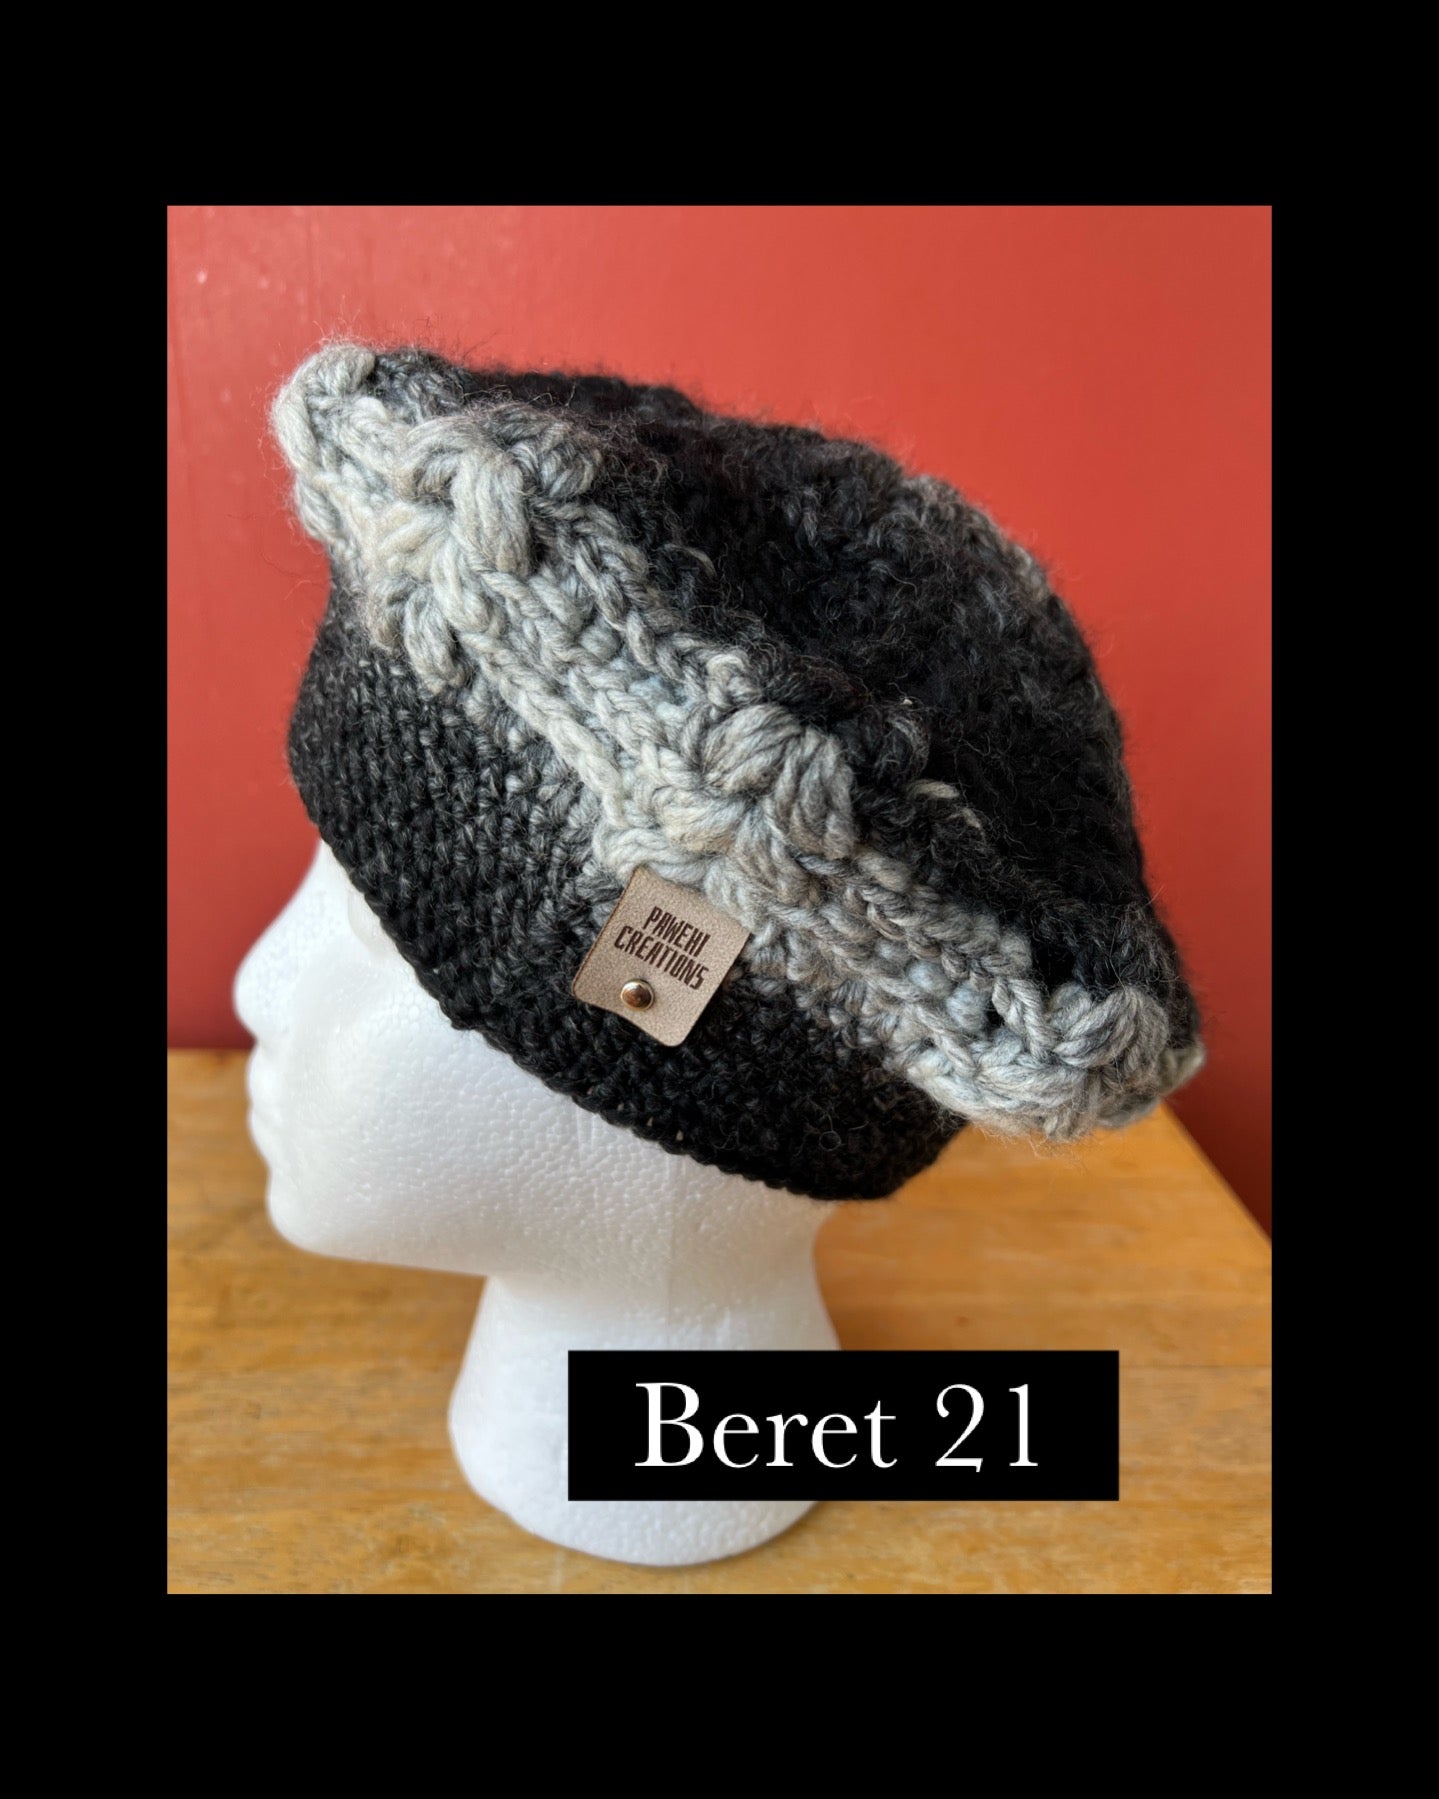 Pop-Up Mākeke - Pawehi Creations - Crochet Beret Hat - Style #21